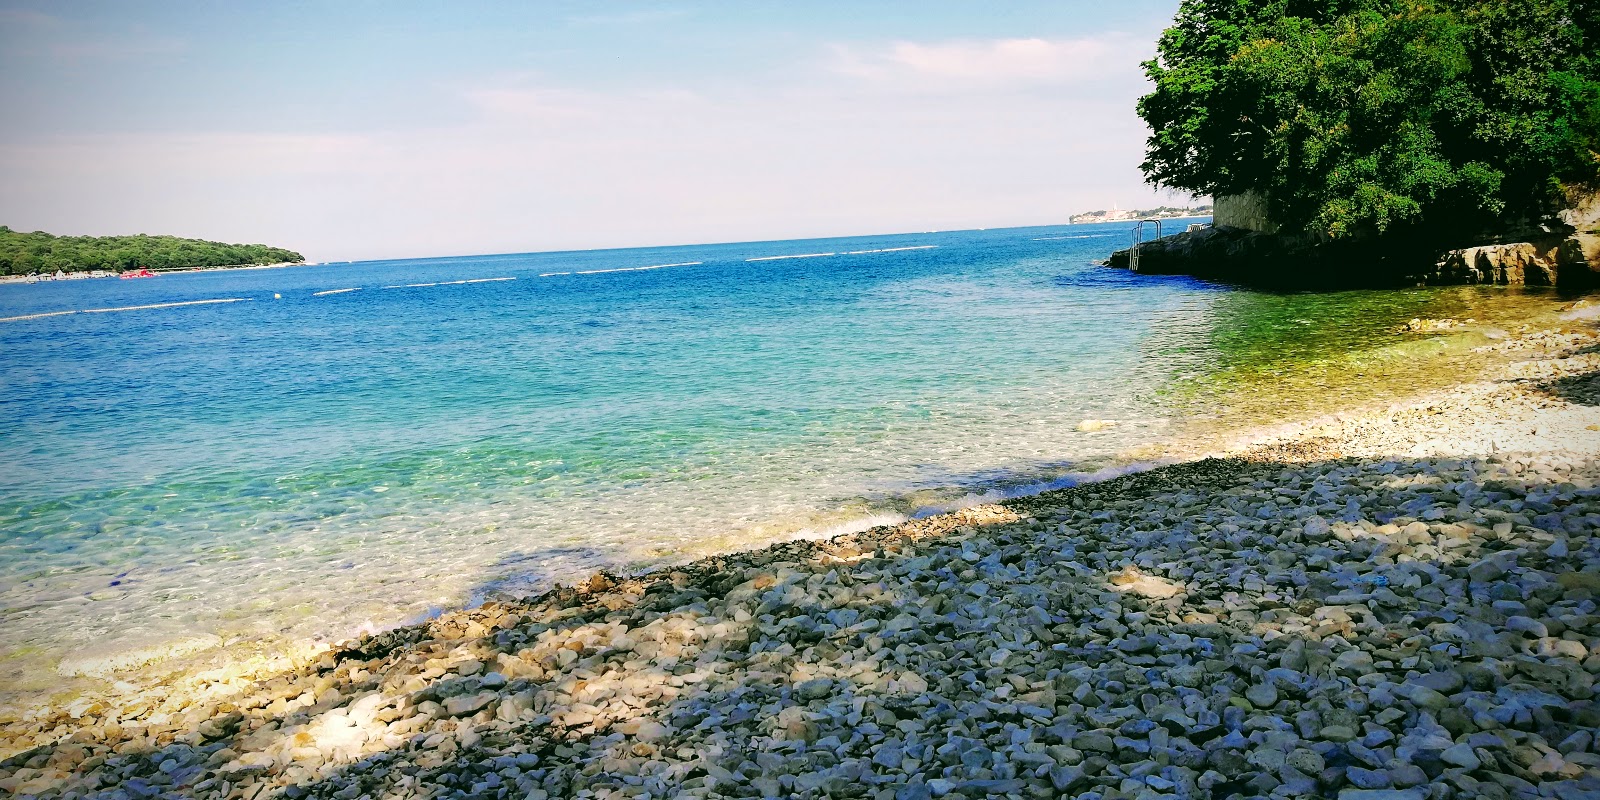 Fotografie cu Crnika beach - locul popular printre cunoscătorii de relaxare